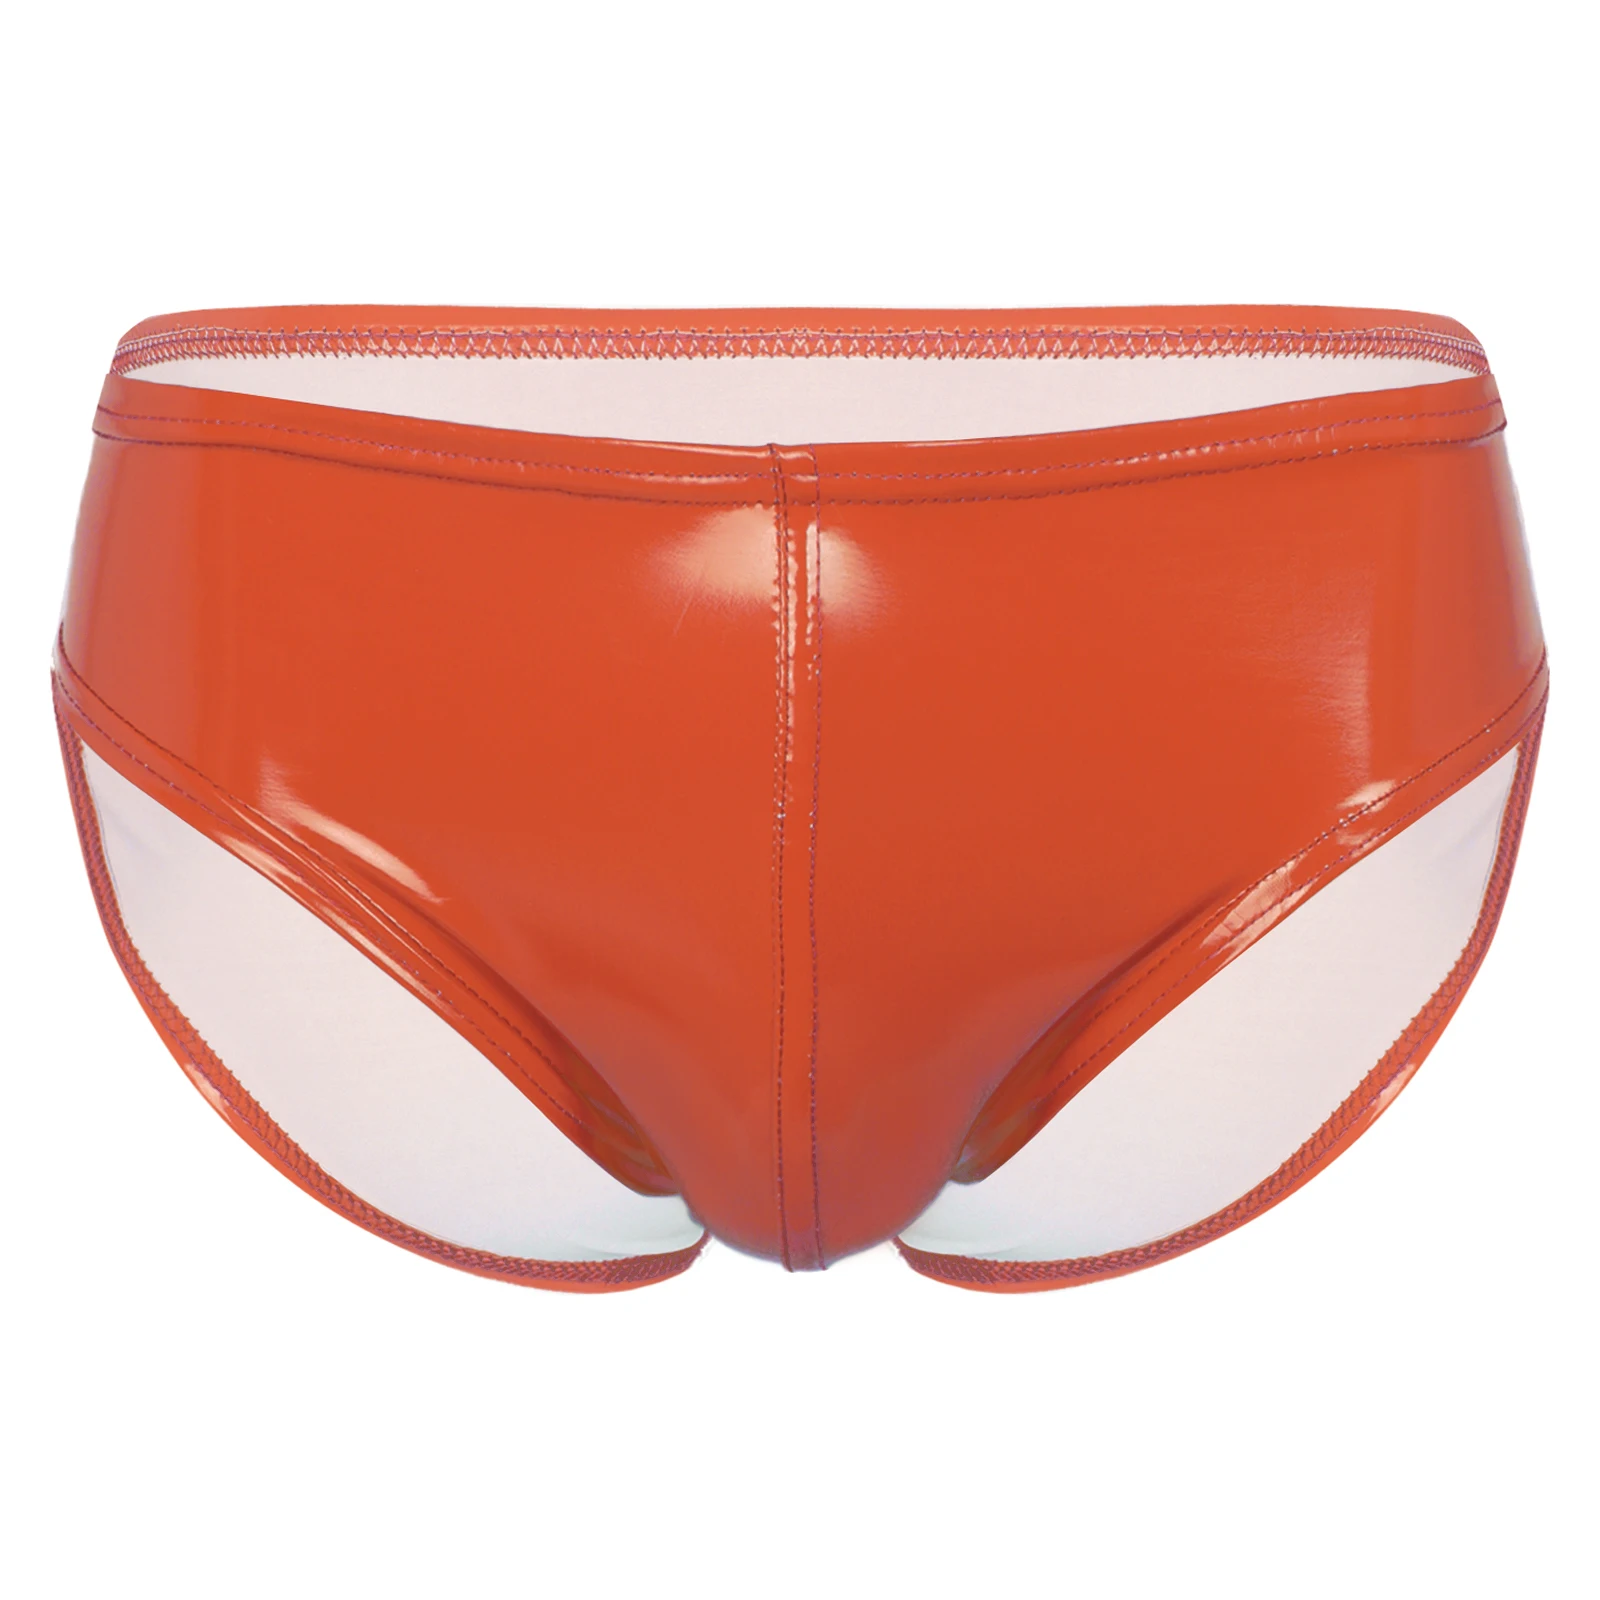 Mens Underwear Wet Look Patent Leather Briefs Panties Elastic